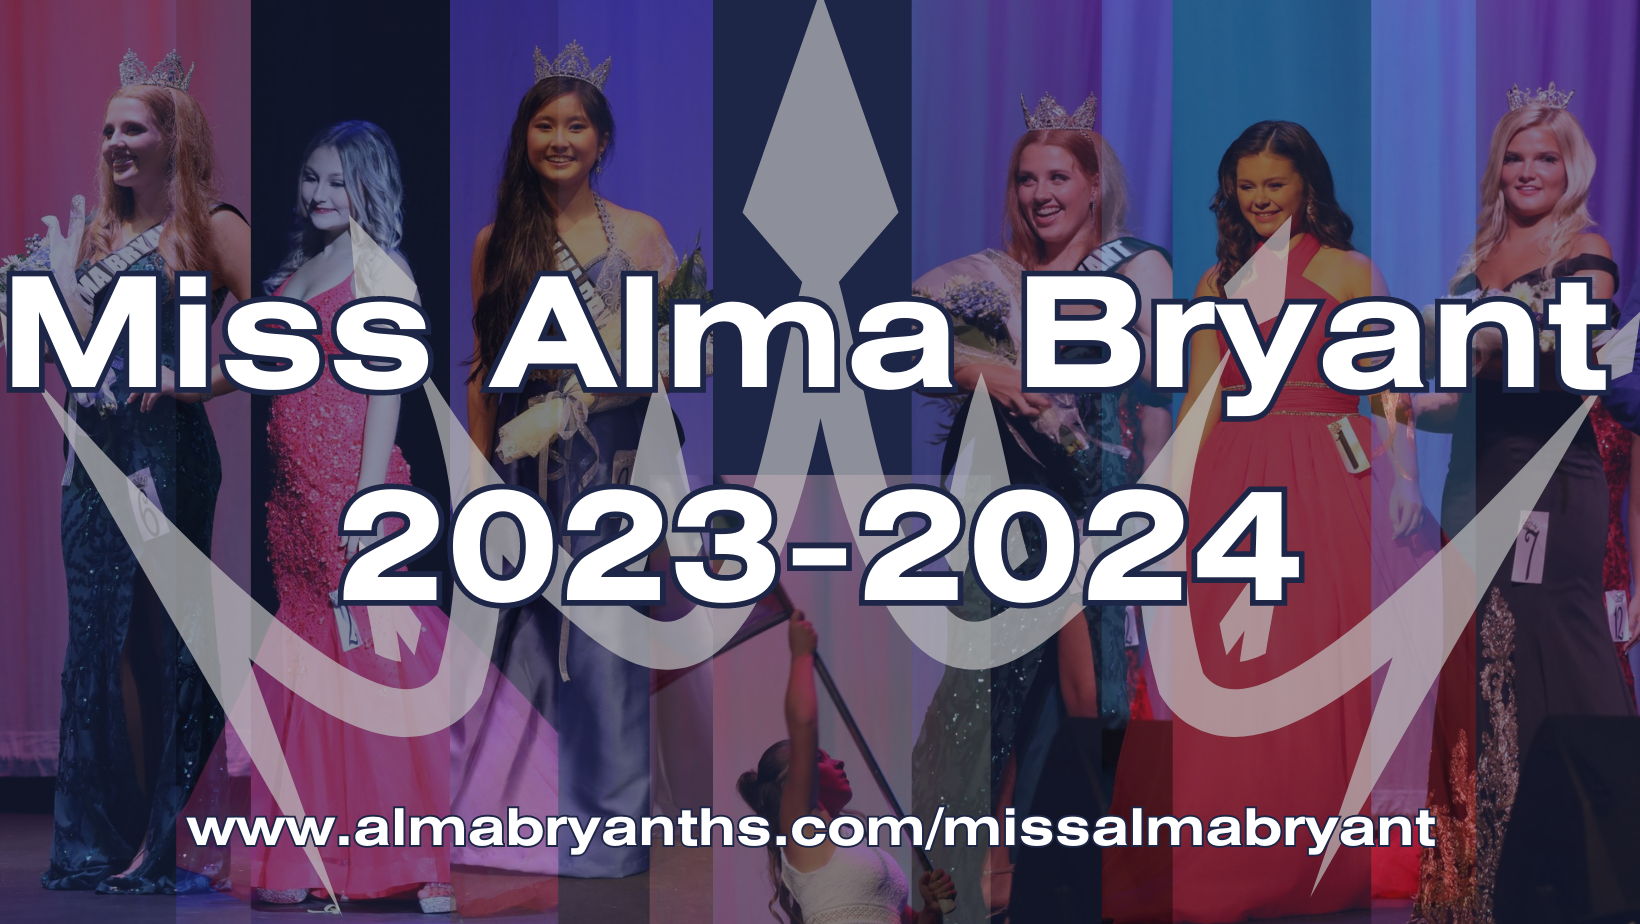 Miss Alma Bryant 2023-2024